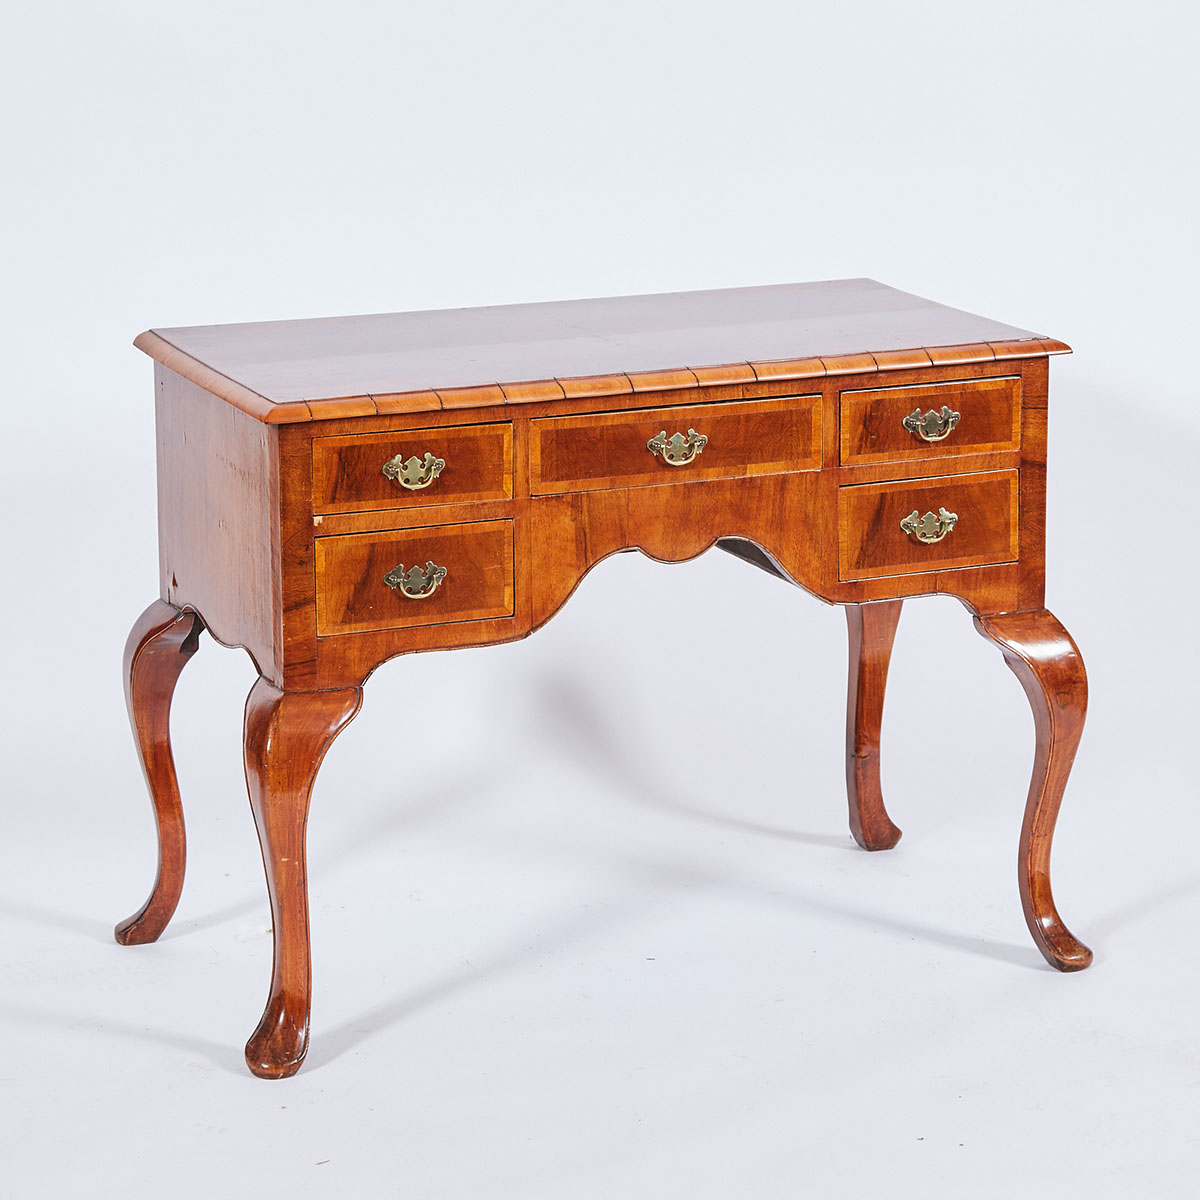 George I Figured Walnut Dressing Table, early 18th century